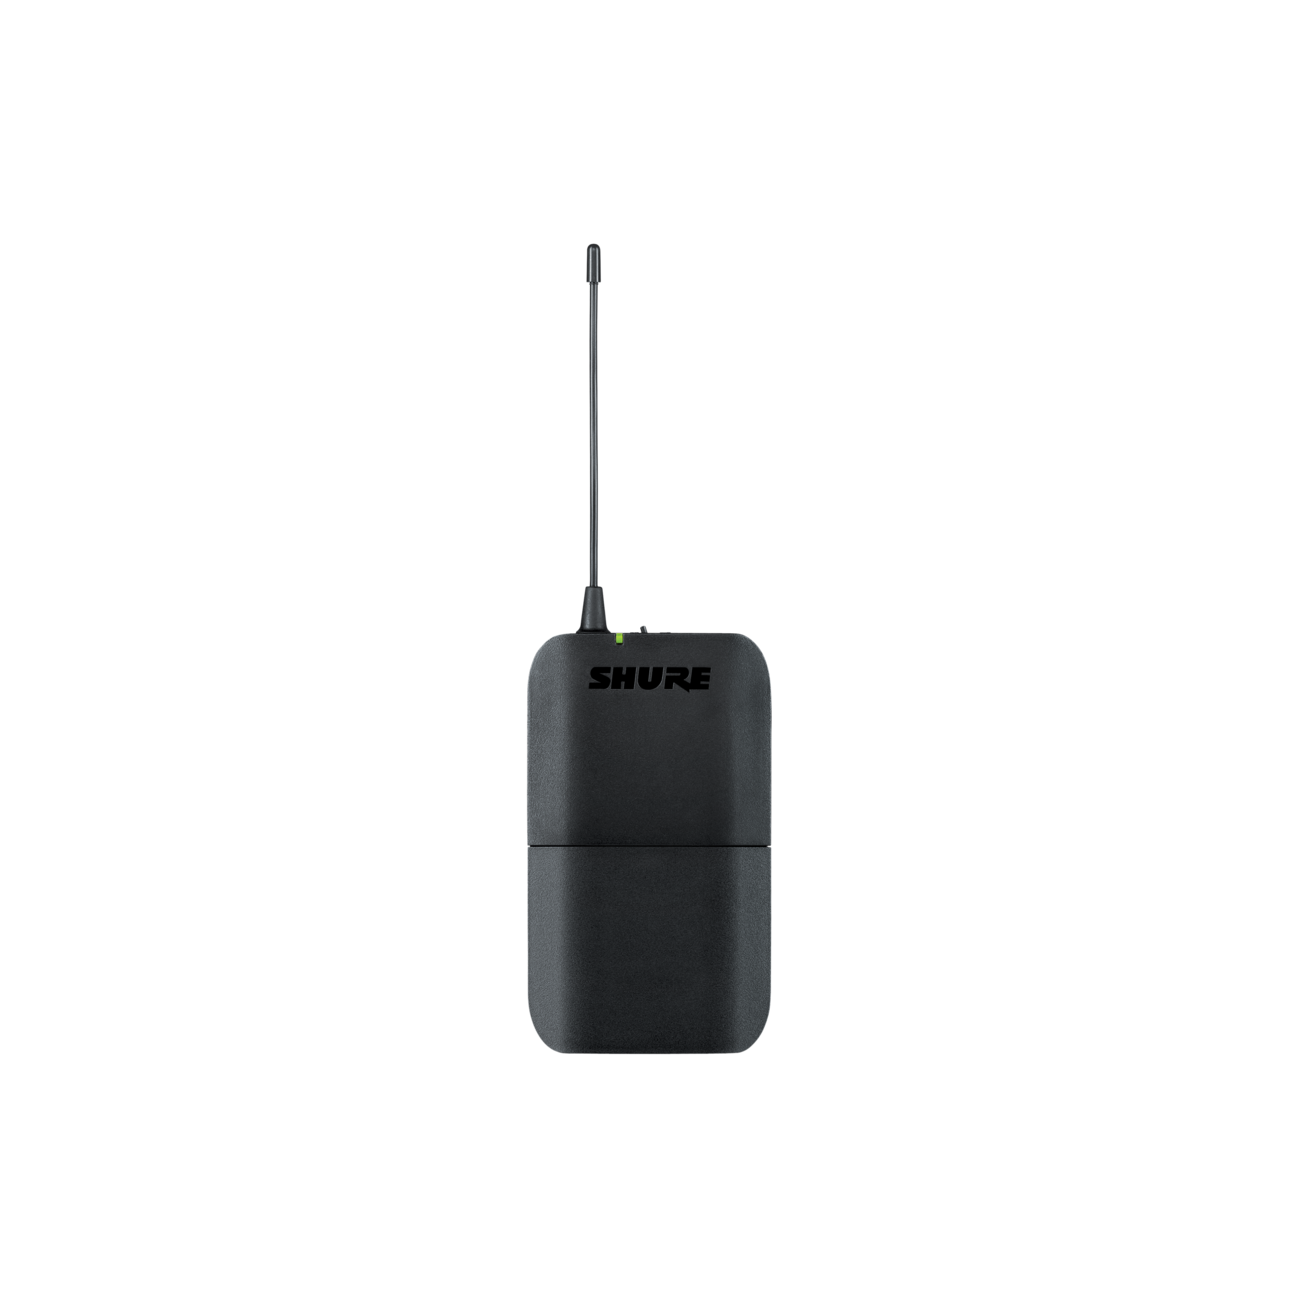 Shure blx14E/cvl wireless Lapel microphone.